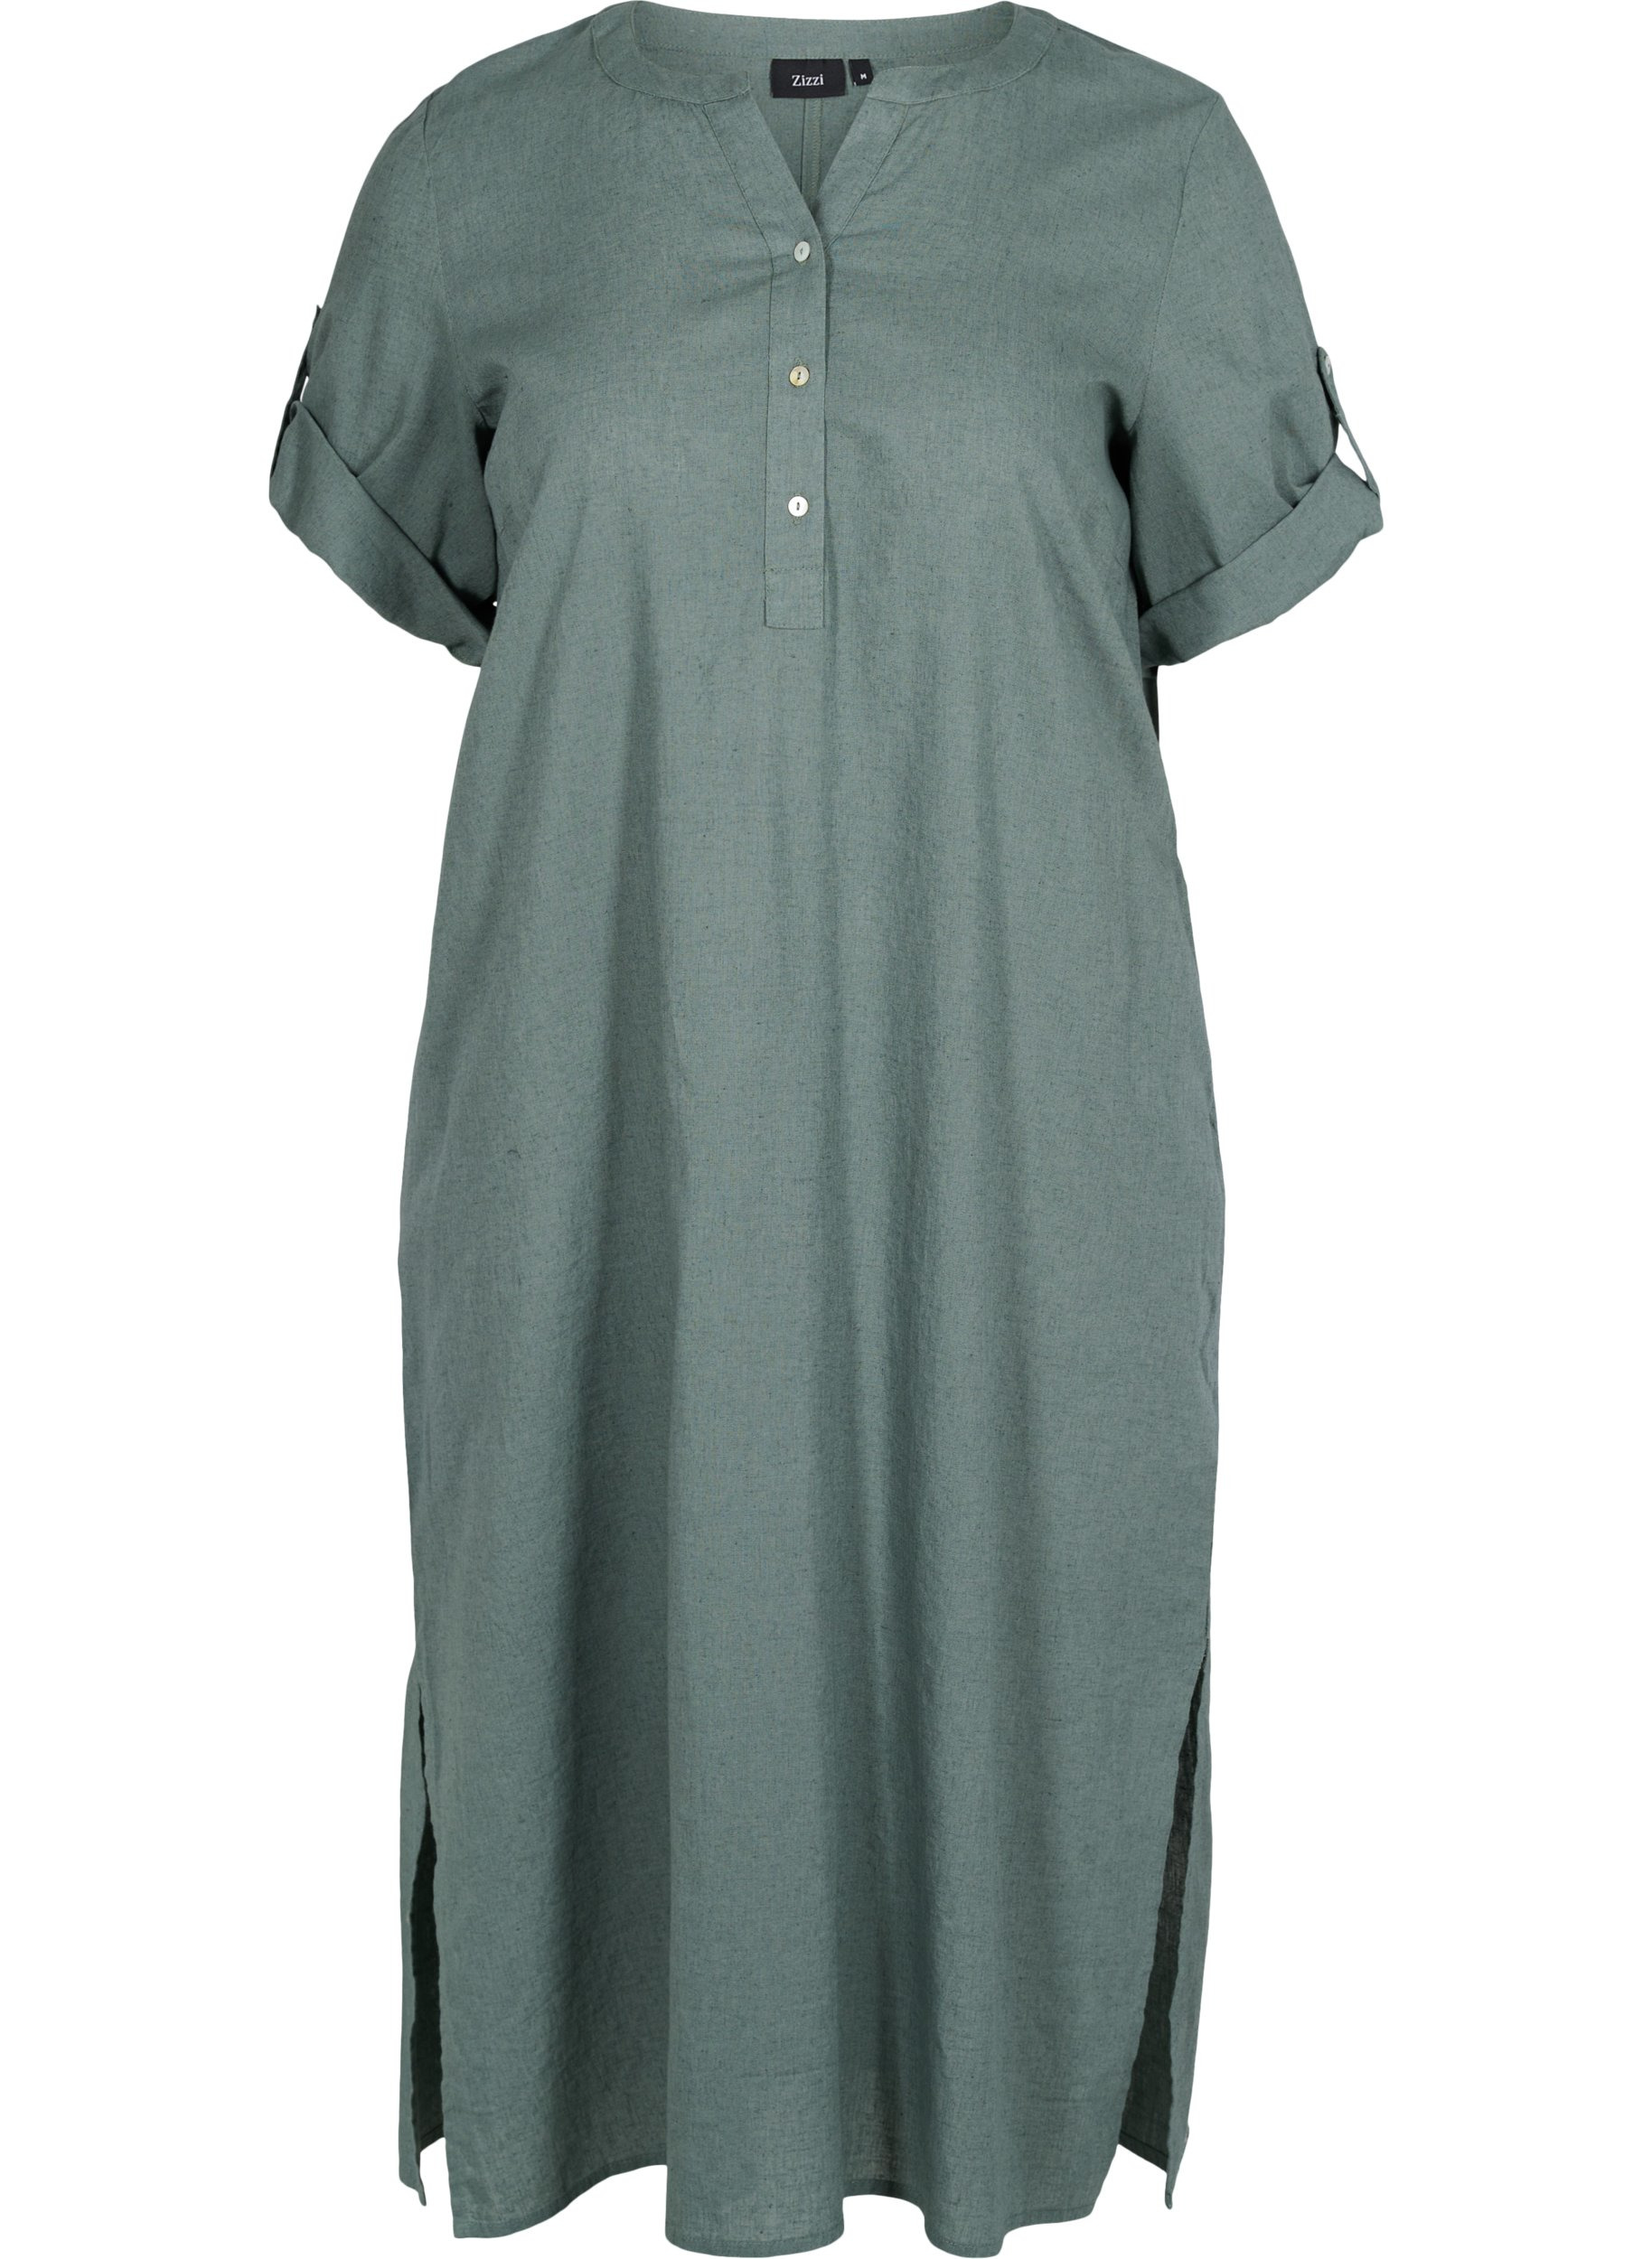 Long short-sleeved shirt dress, Balsam Green, Packshot